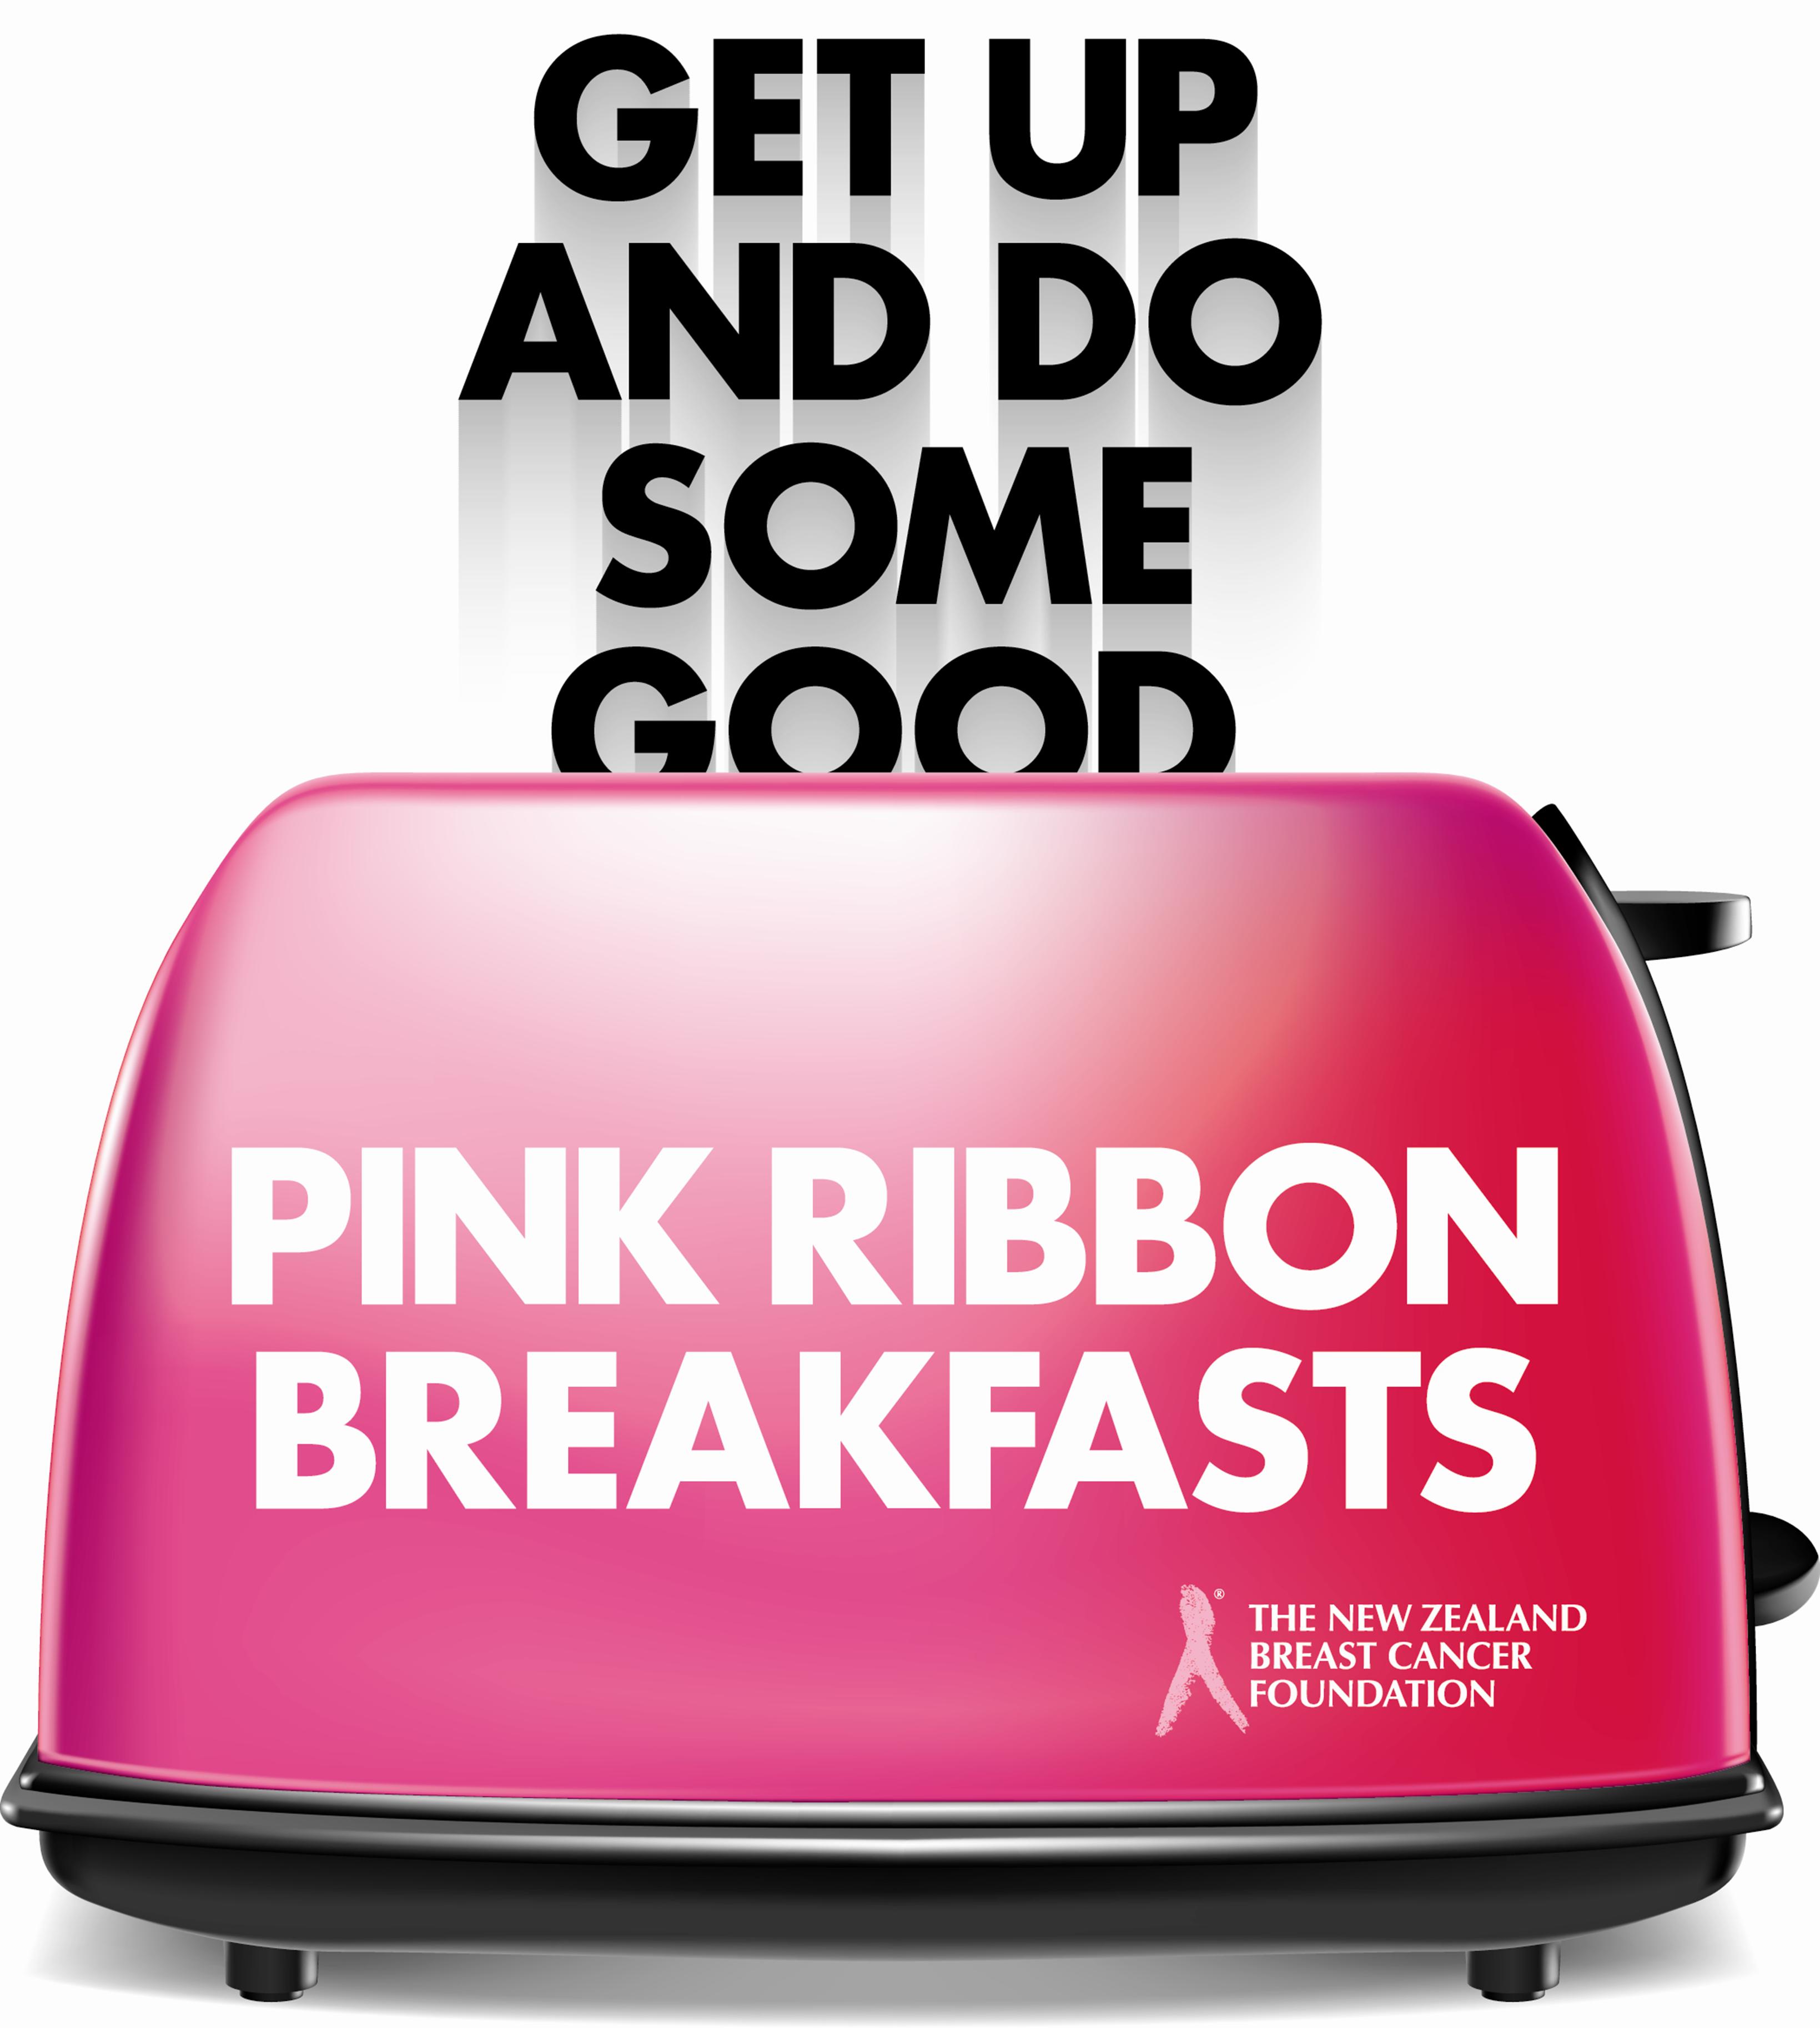 Pink Ribbon Breakfast toaster image